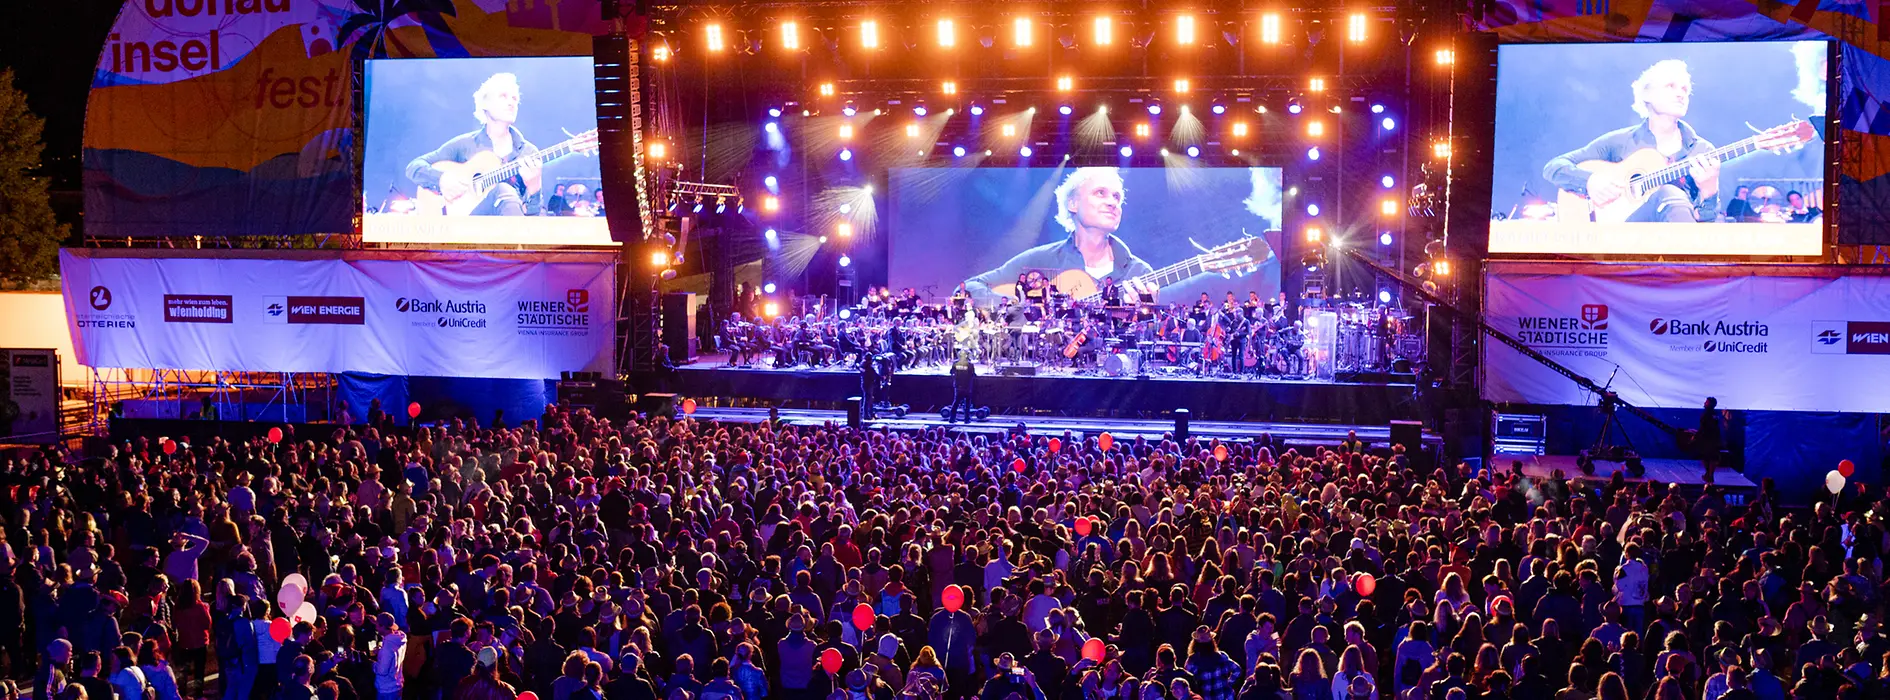 Danube Island Festival 2021, concert with Ulli Bäer